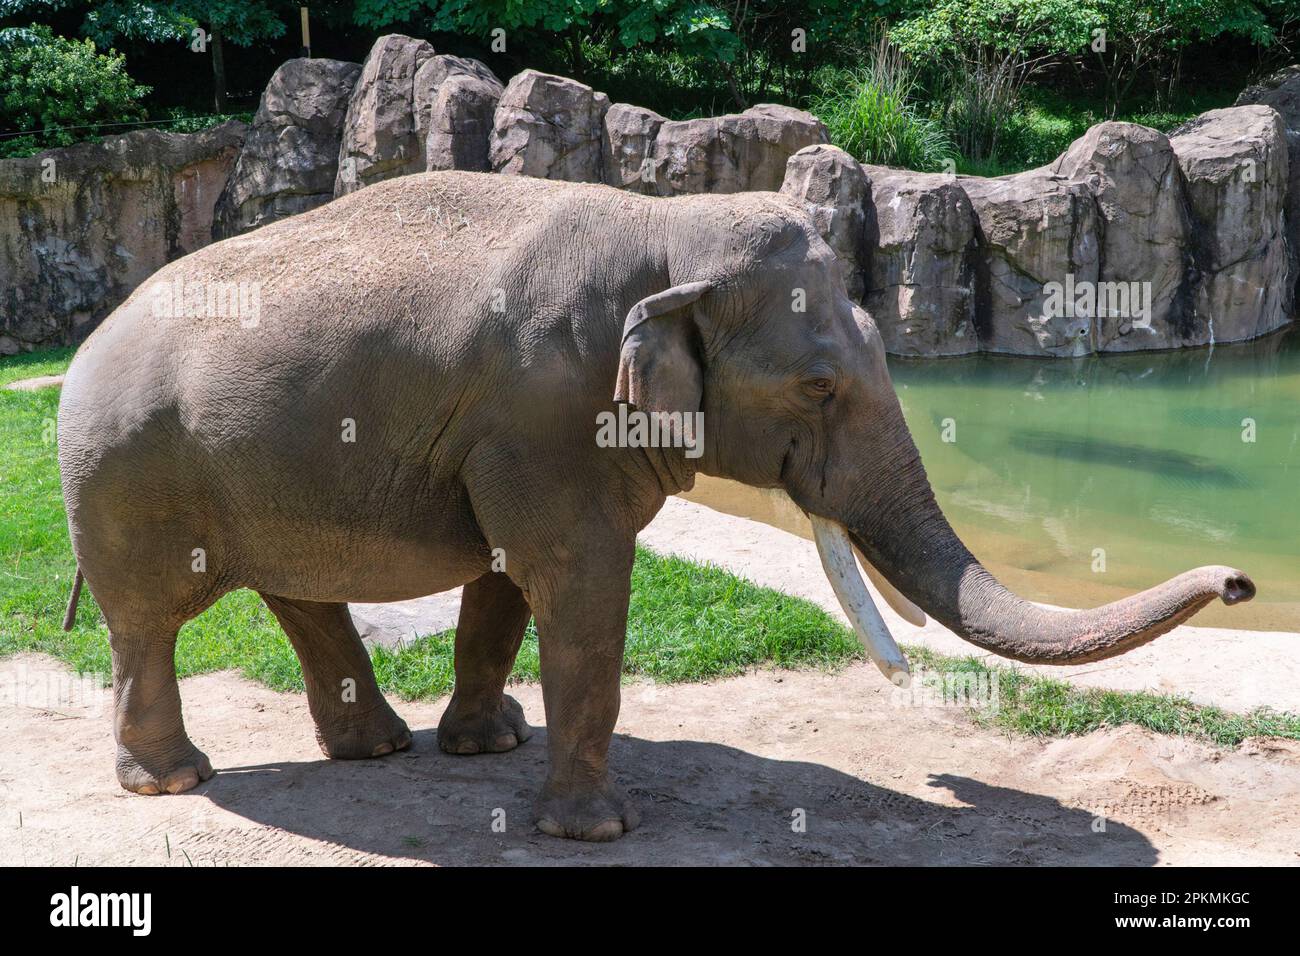 Asian Elephant, Elephas maximus, standing nest to a pond, Smithsonian National Zoological Park, Washington, DC, USA Stock Photo